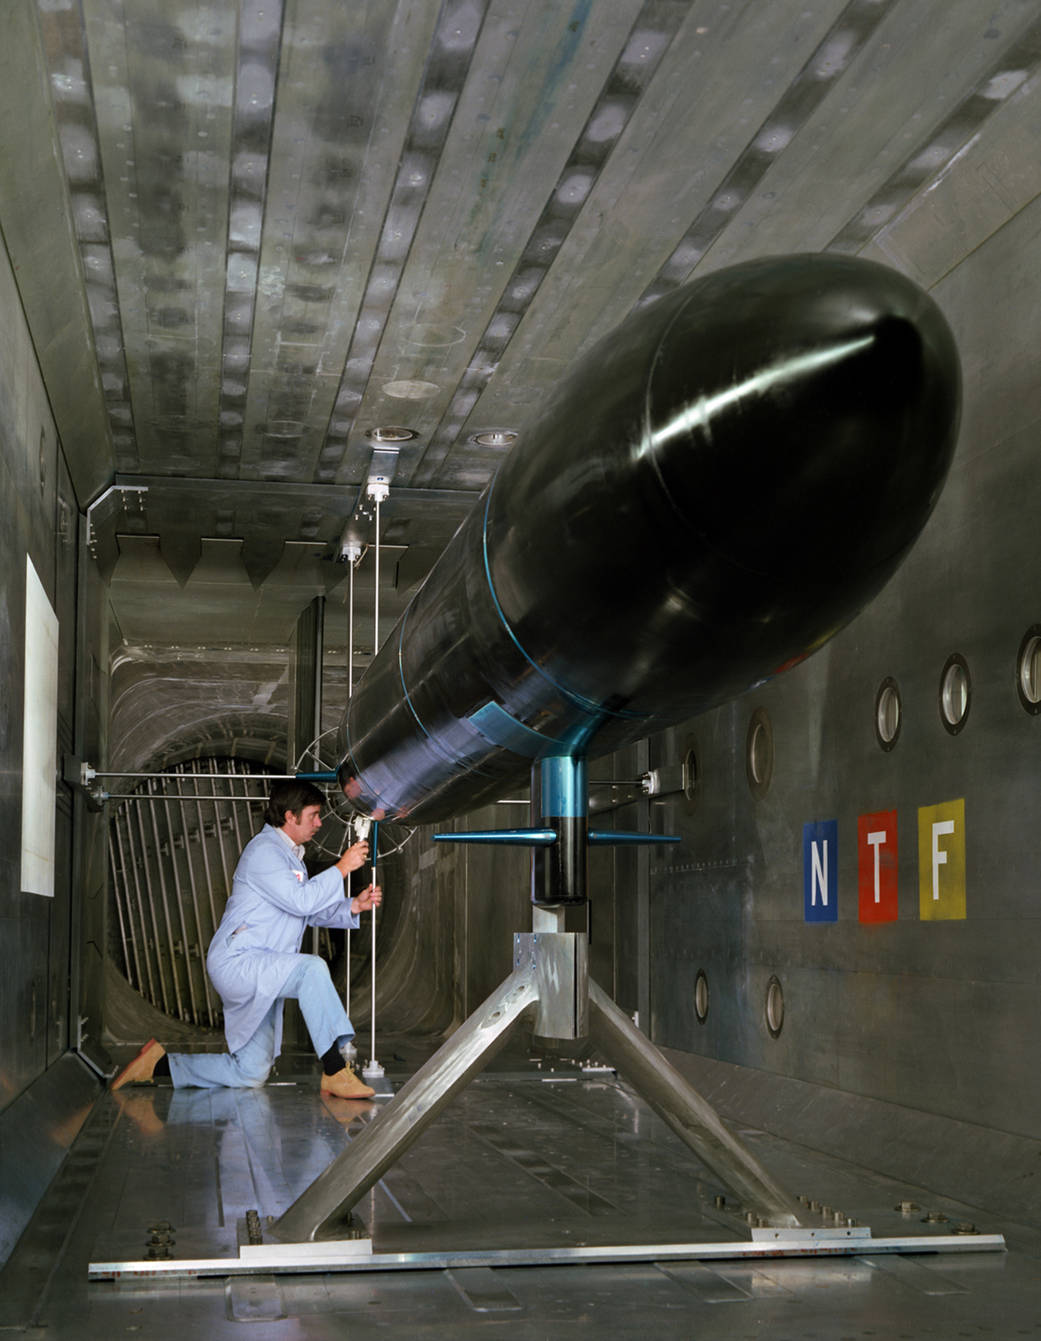 Submarine in a Wind Tunnel